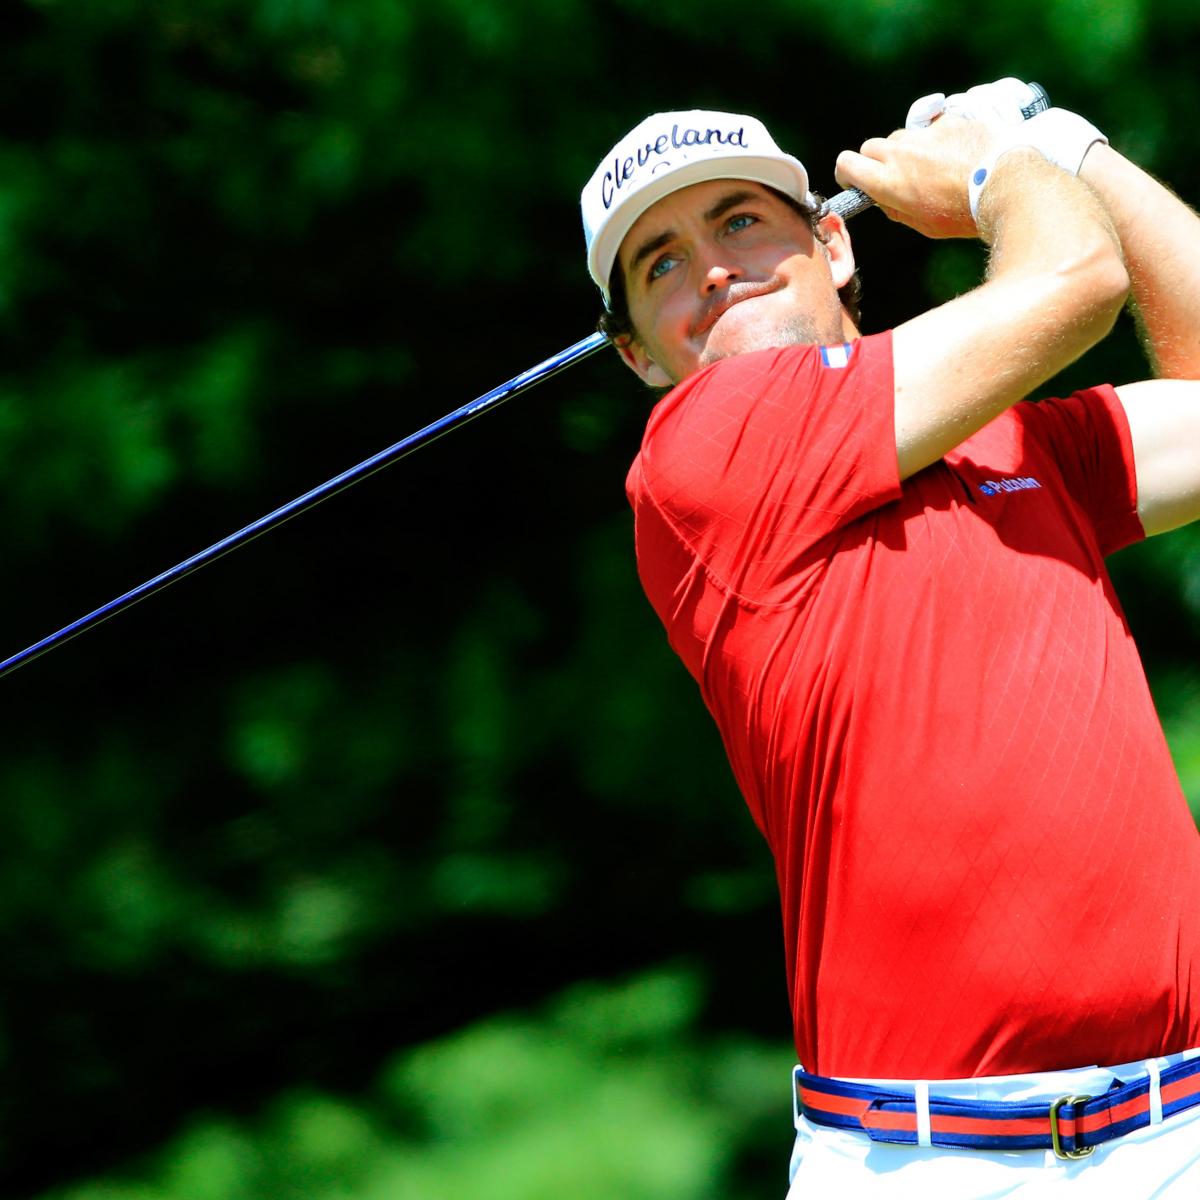 PGA Championship 2013 Latest News and Updates Heading into Oak Hill